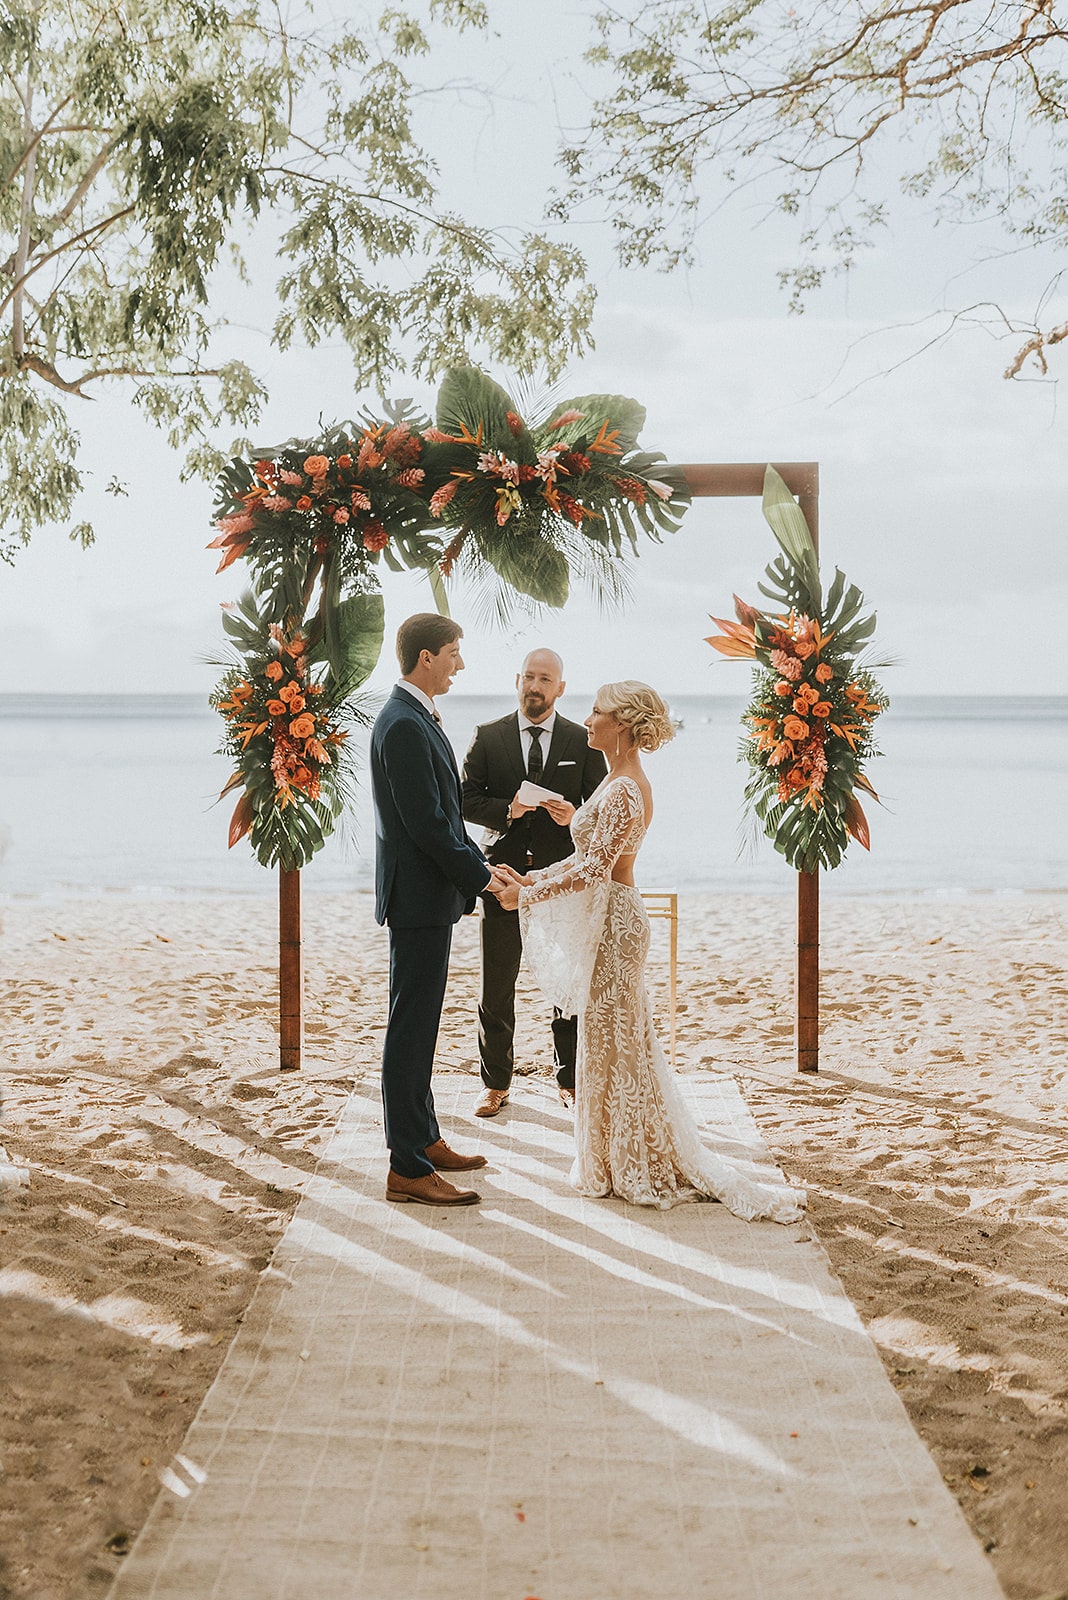 wedding ohotographer costa rica